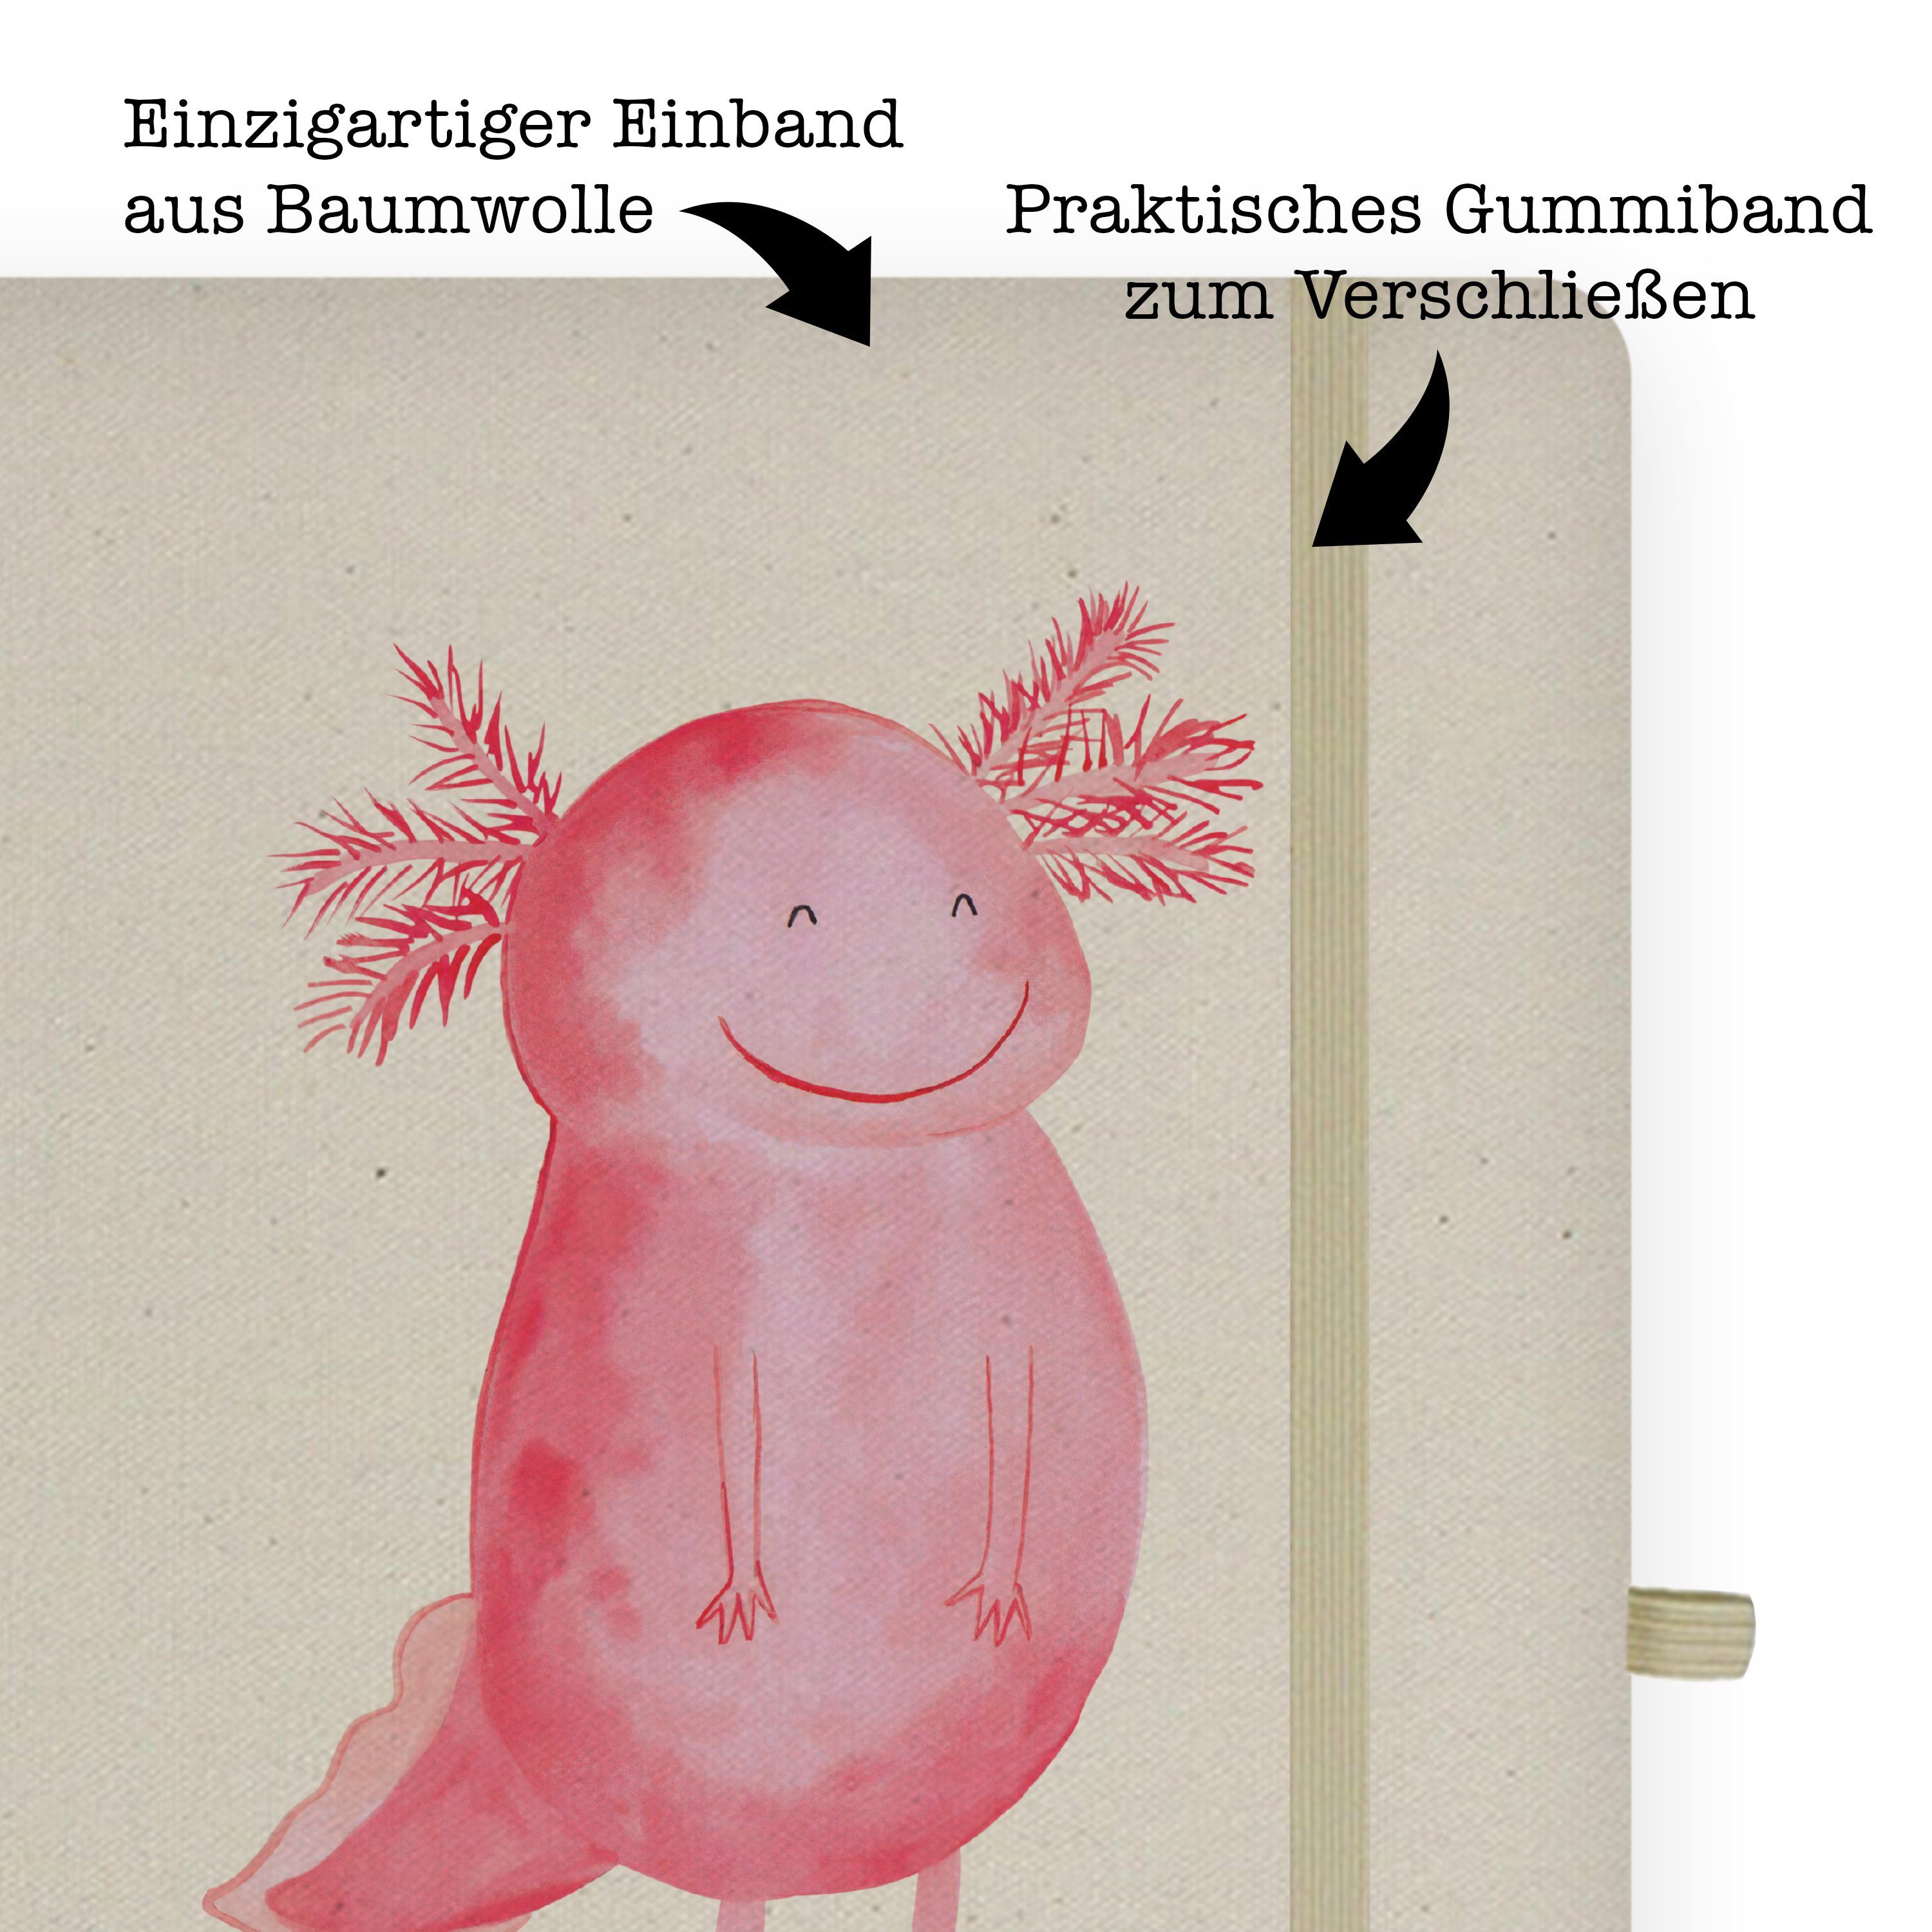 Mr. & Mrs. Panda Notizbuch - - Axolotl Schwanzlurch, Adressbuch Geschenk, glücklich Transparent